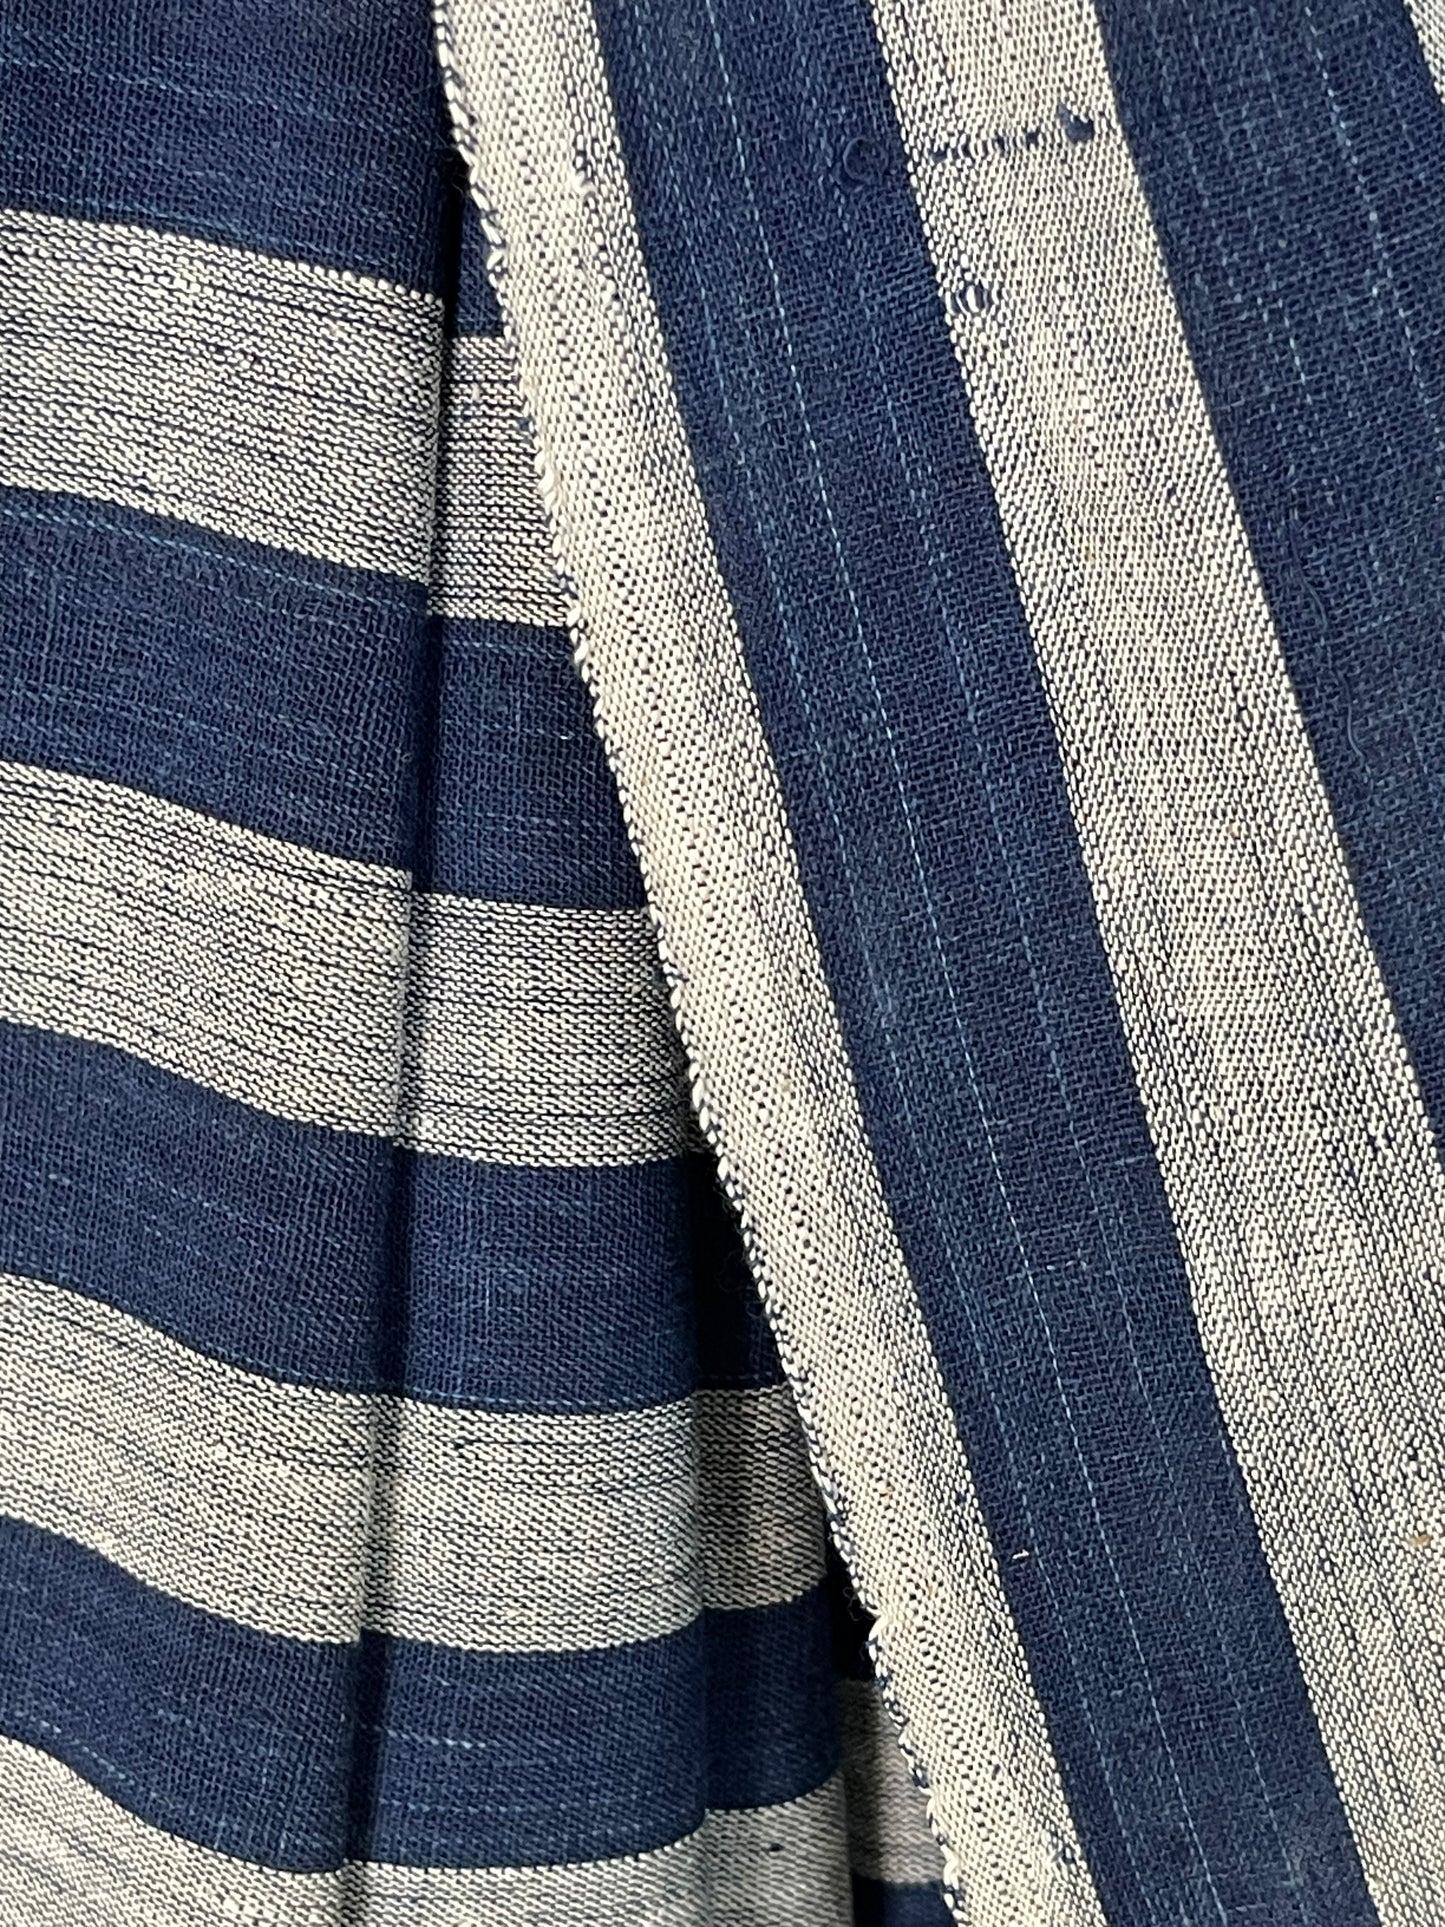 Indigo natural dyed, hand spun, hand woven stripes cotton fabric